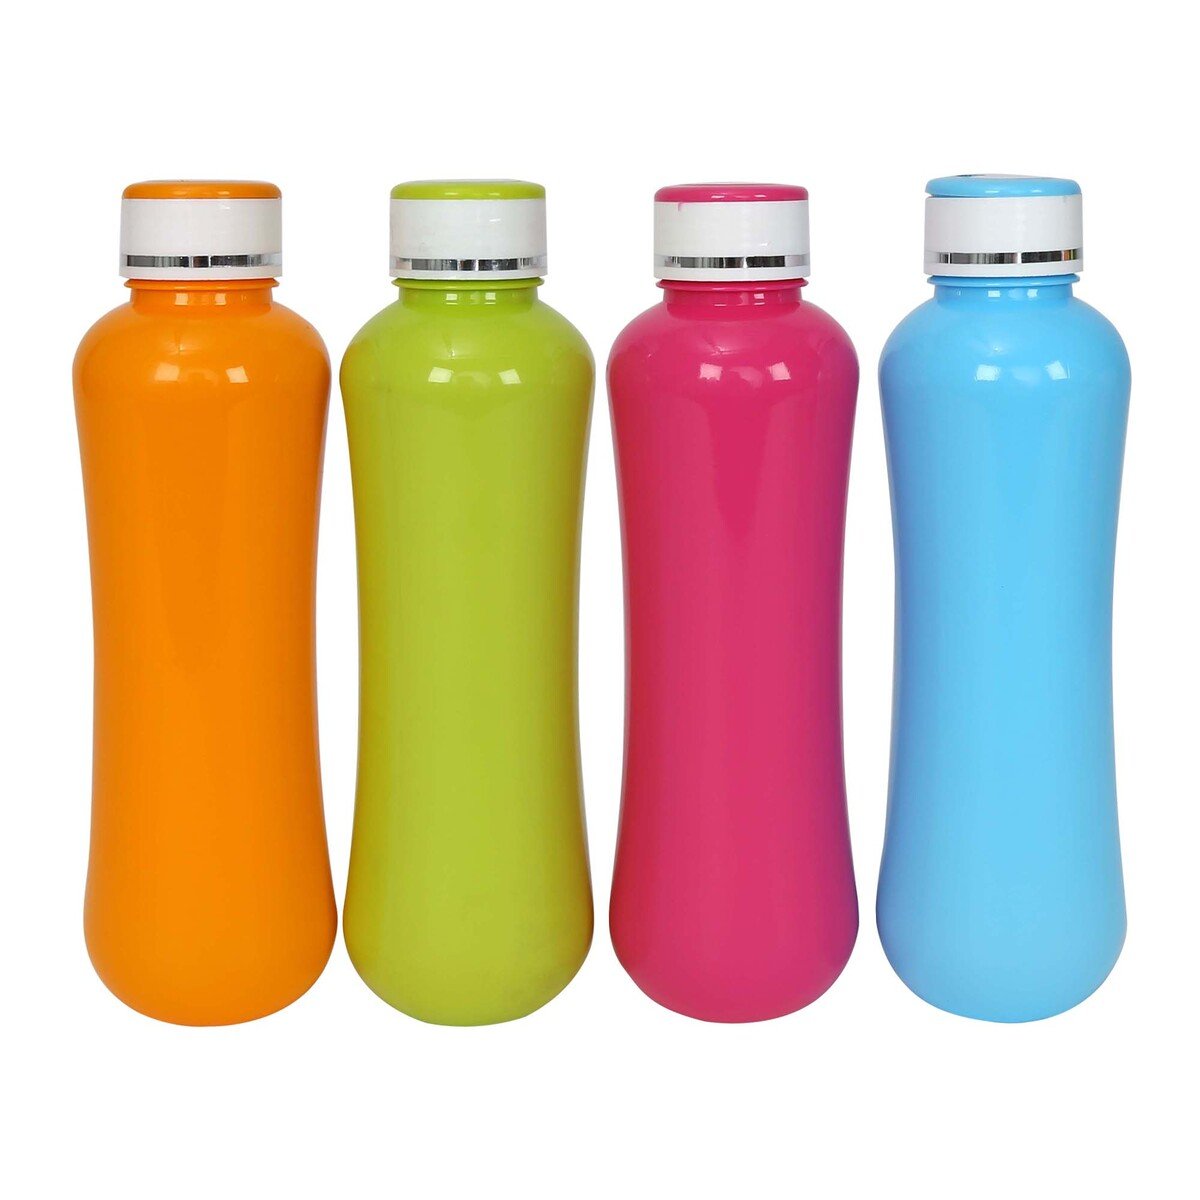 Joyful Plastic Bottle CLASSIC 4pcs Assorted Colors